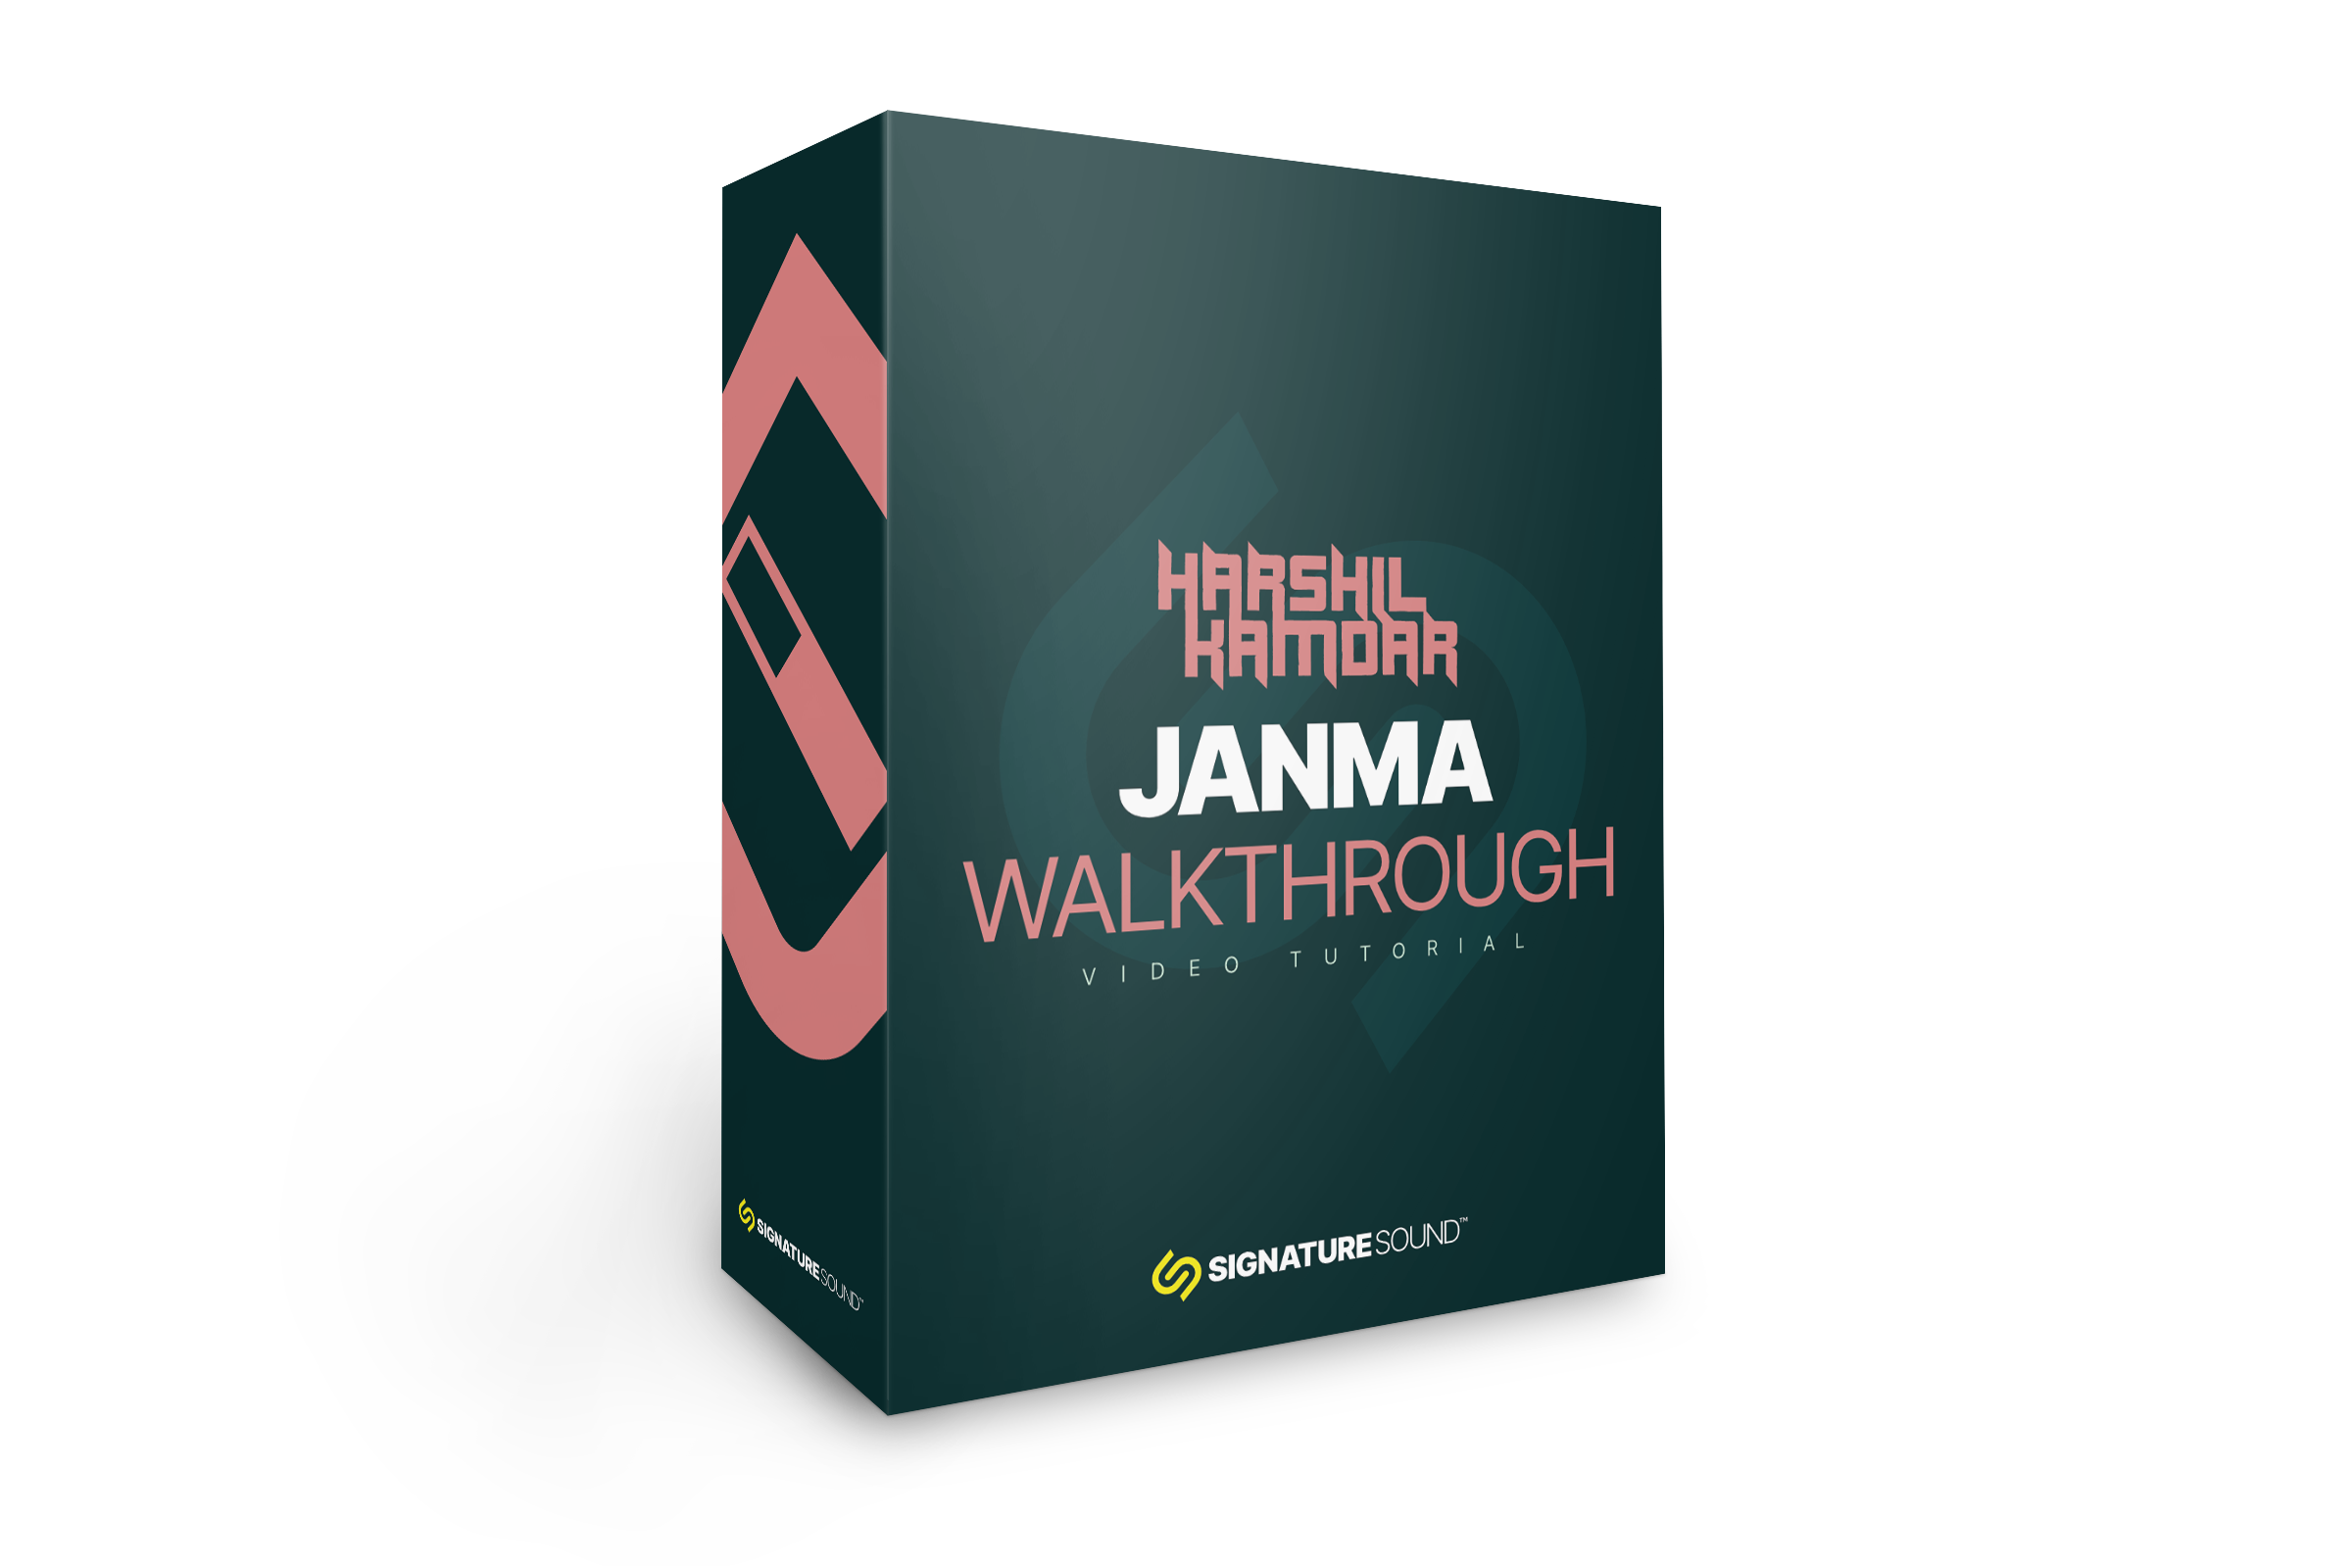 Harshil Kamdar Janma Walkthrough [Video Tutorial]